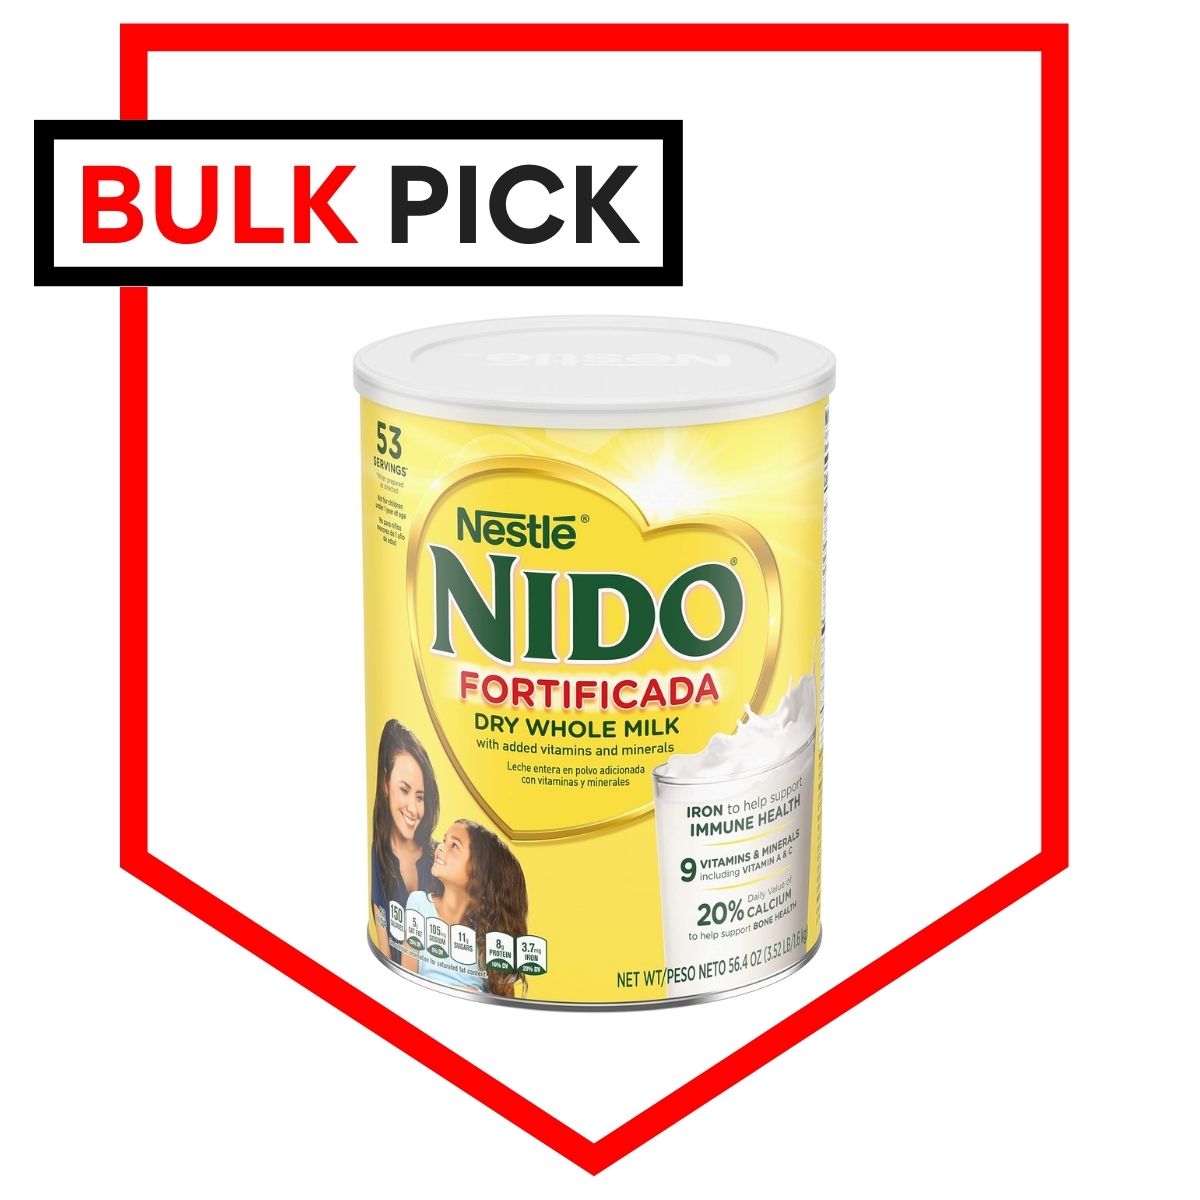 NIDO Fortificada Dry Whole Milk